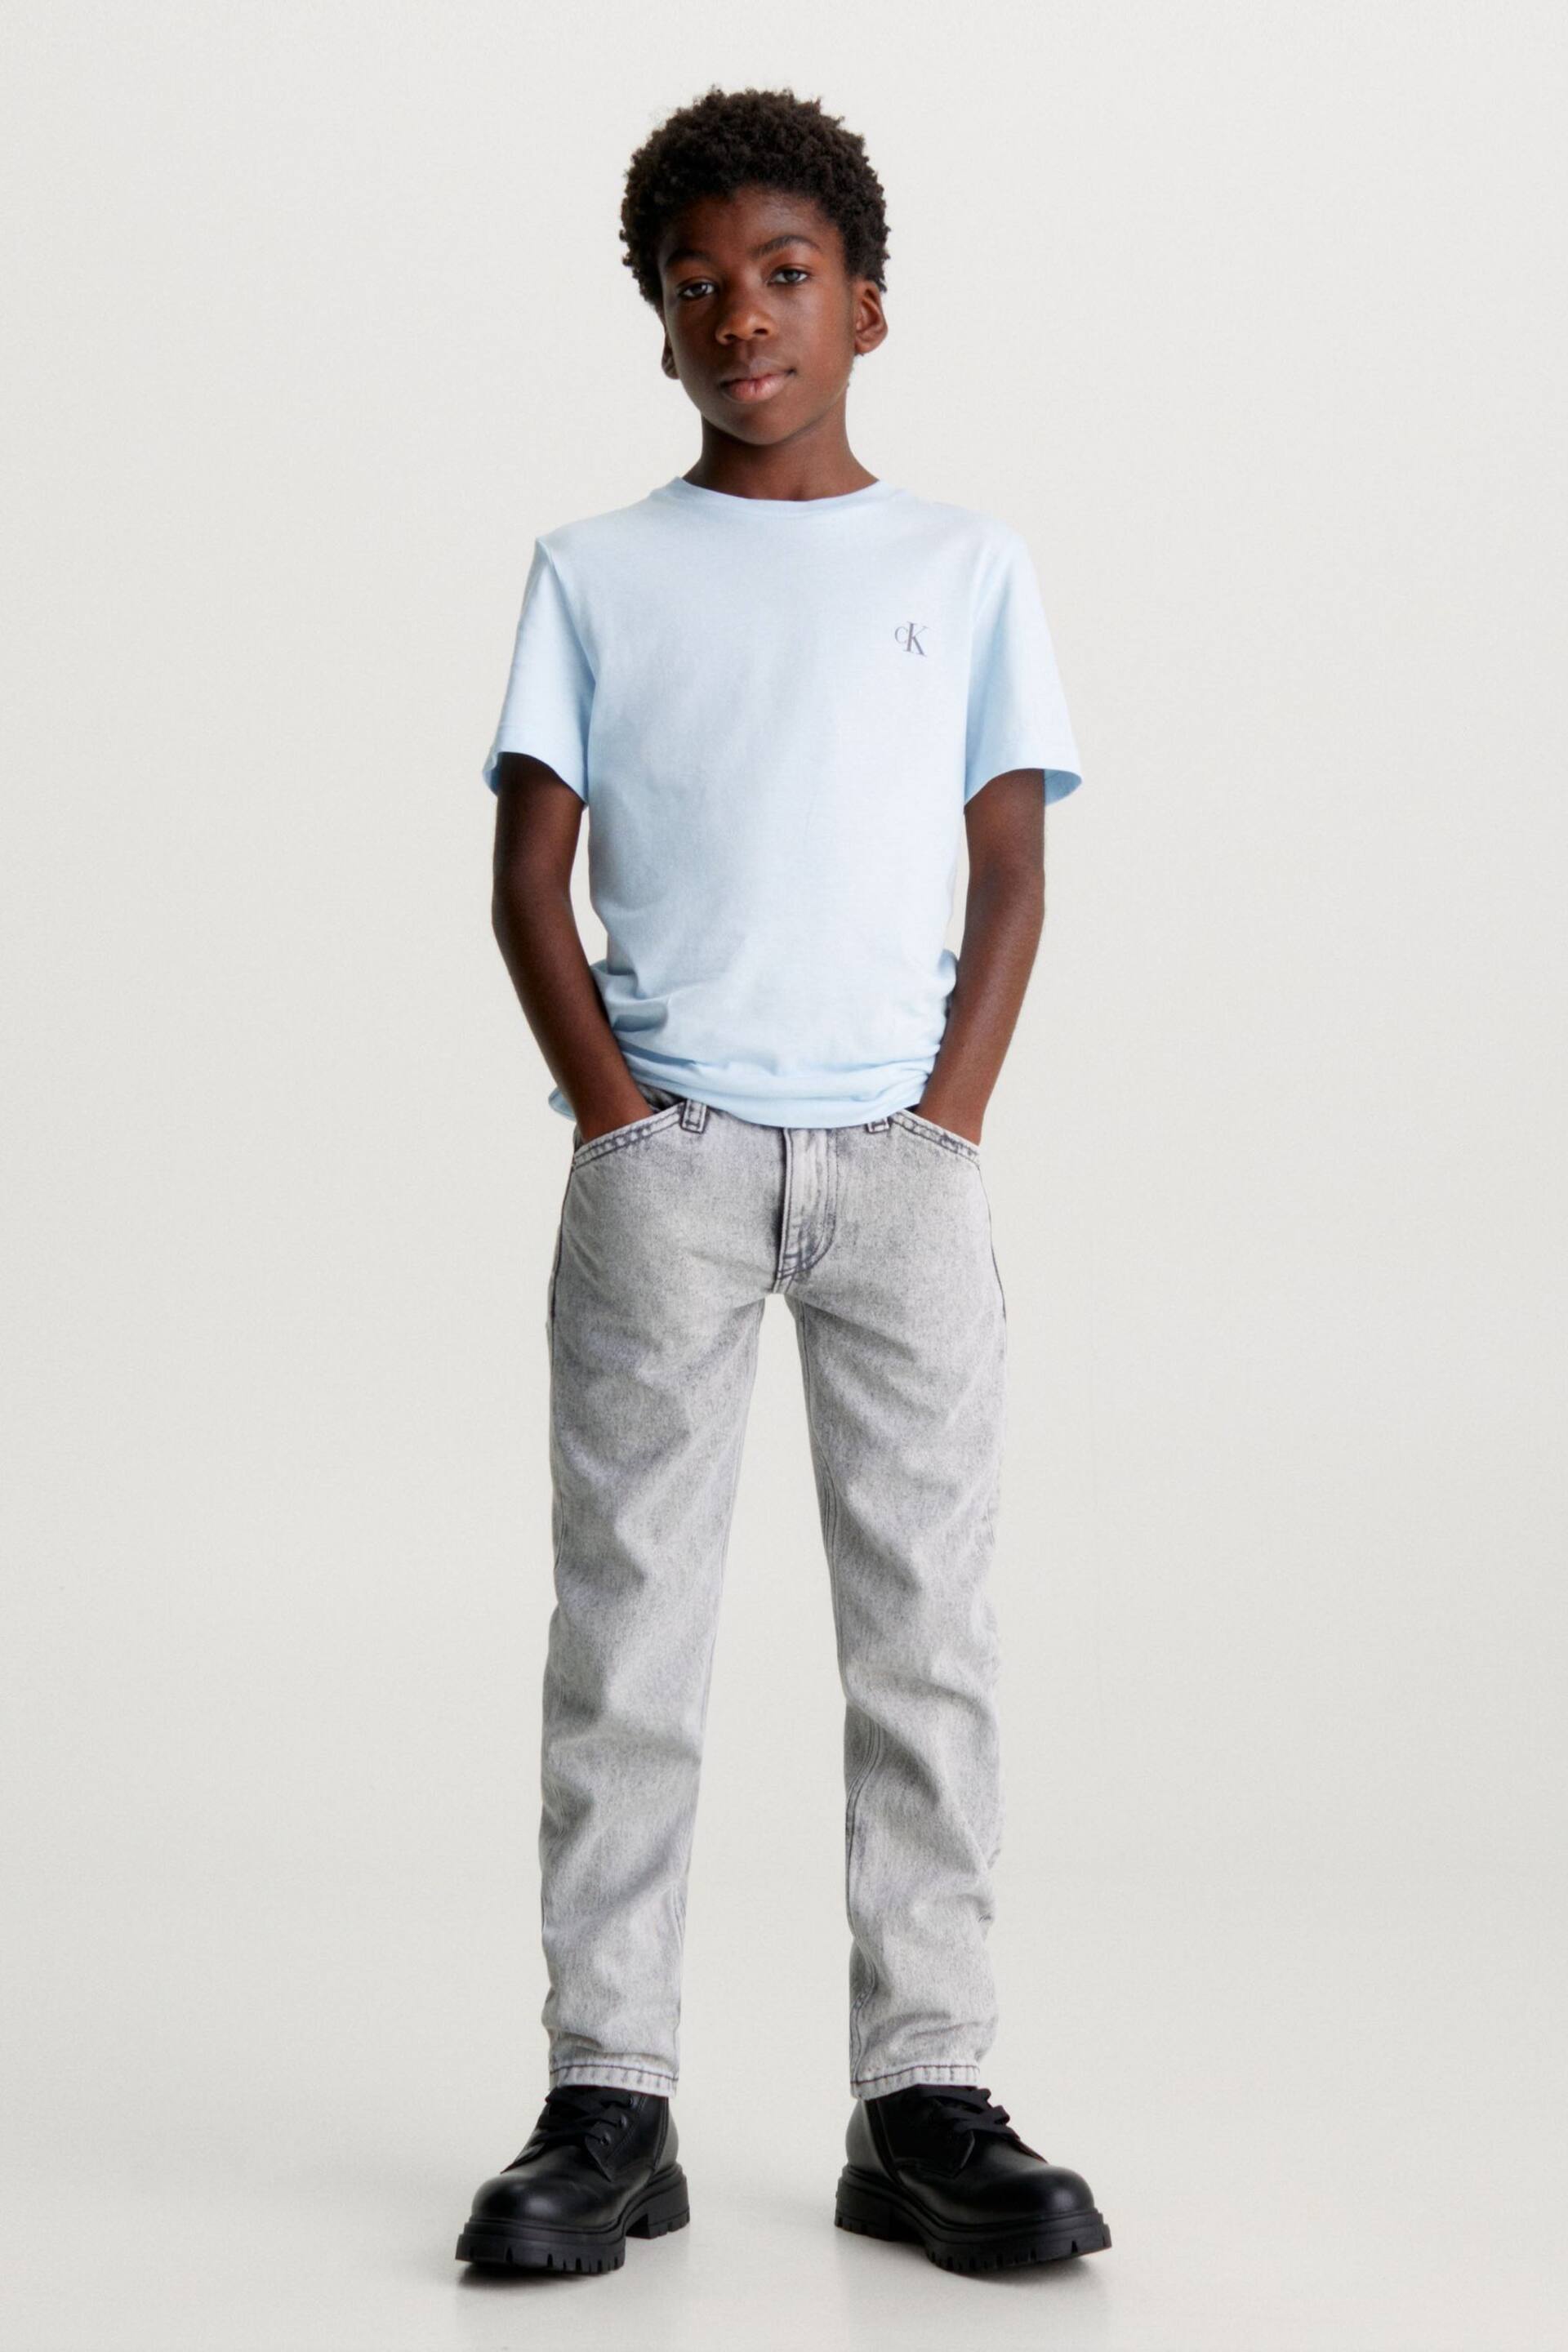 Calvin Klein Jeans Blue Monogram T-Shirt 2 Pack - Image 4 of 5